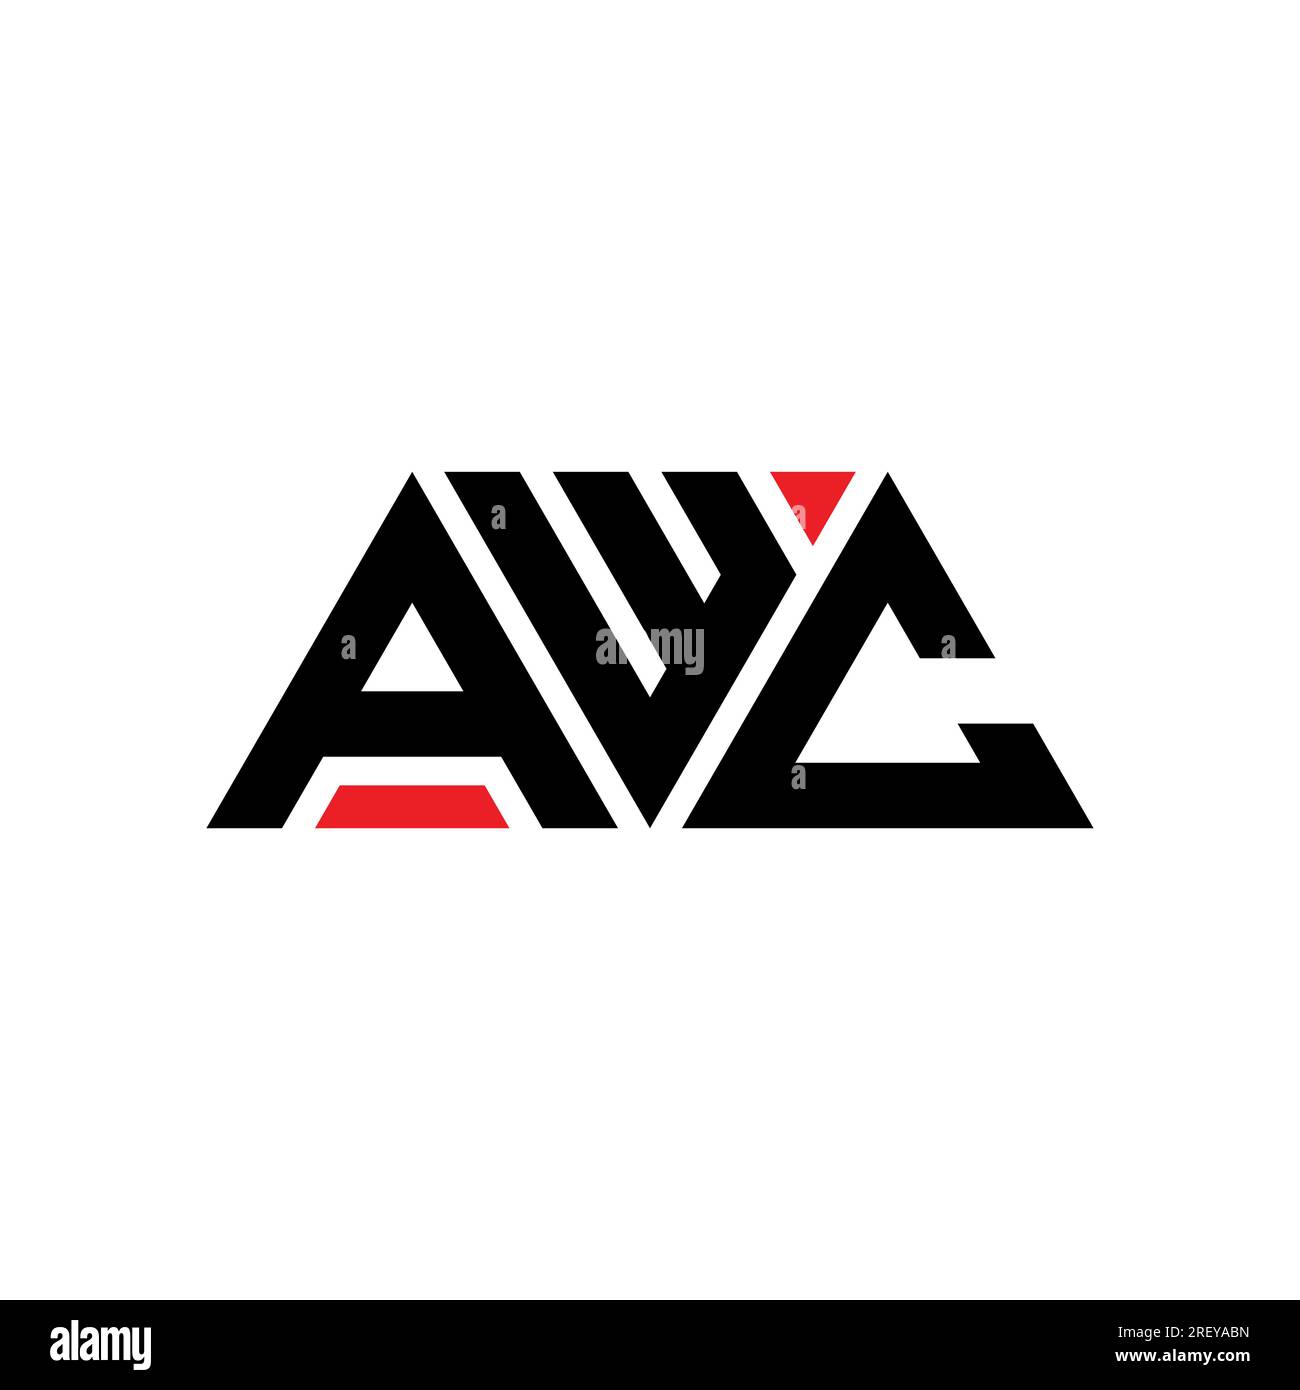 AWC triangle letter logo design with triangle shape. AWC triangle logo